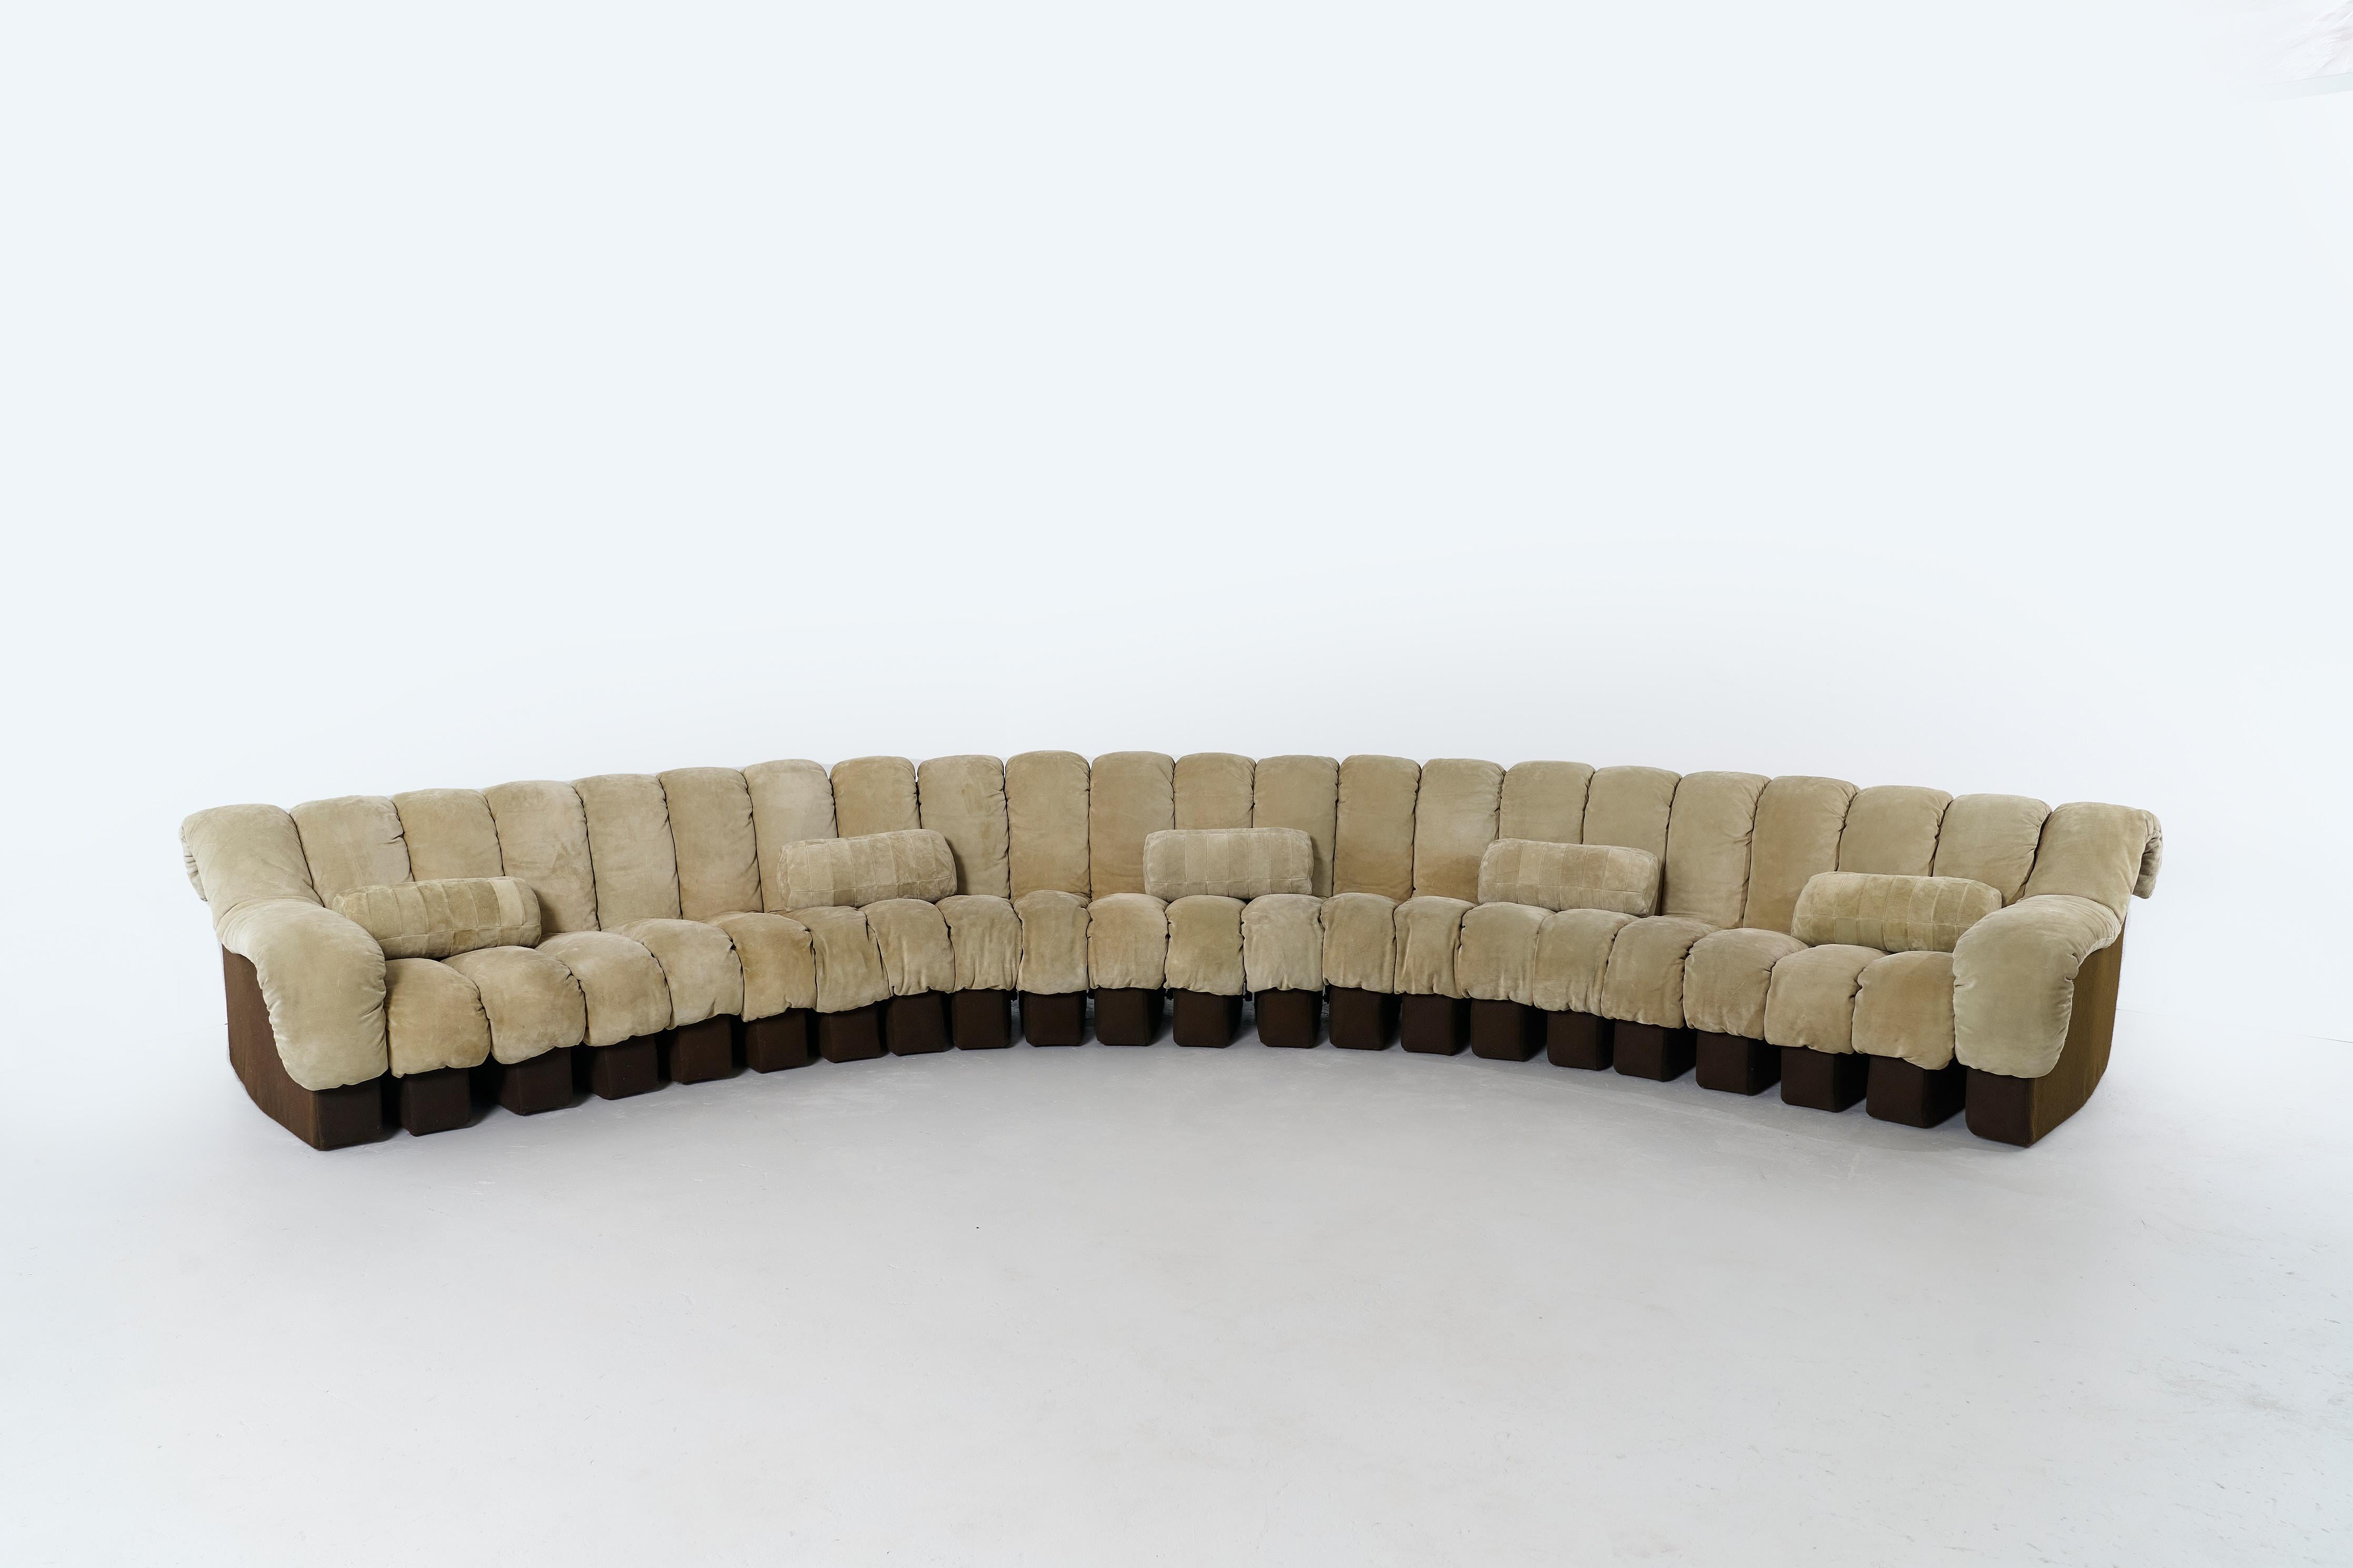 Swiss DS600 Modular Non Stop Sofa by Ueli Berger for De Sede. Set of 22 Pieces